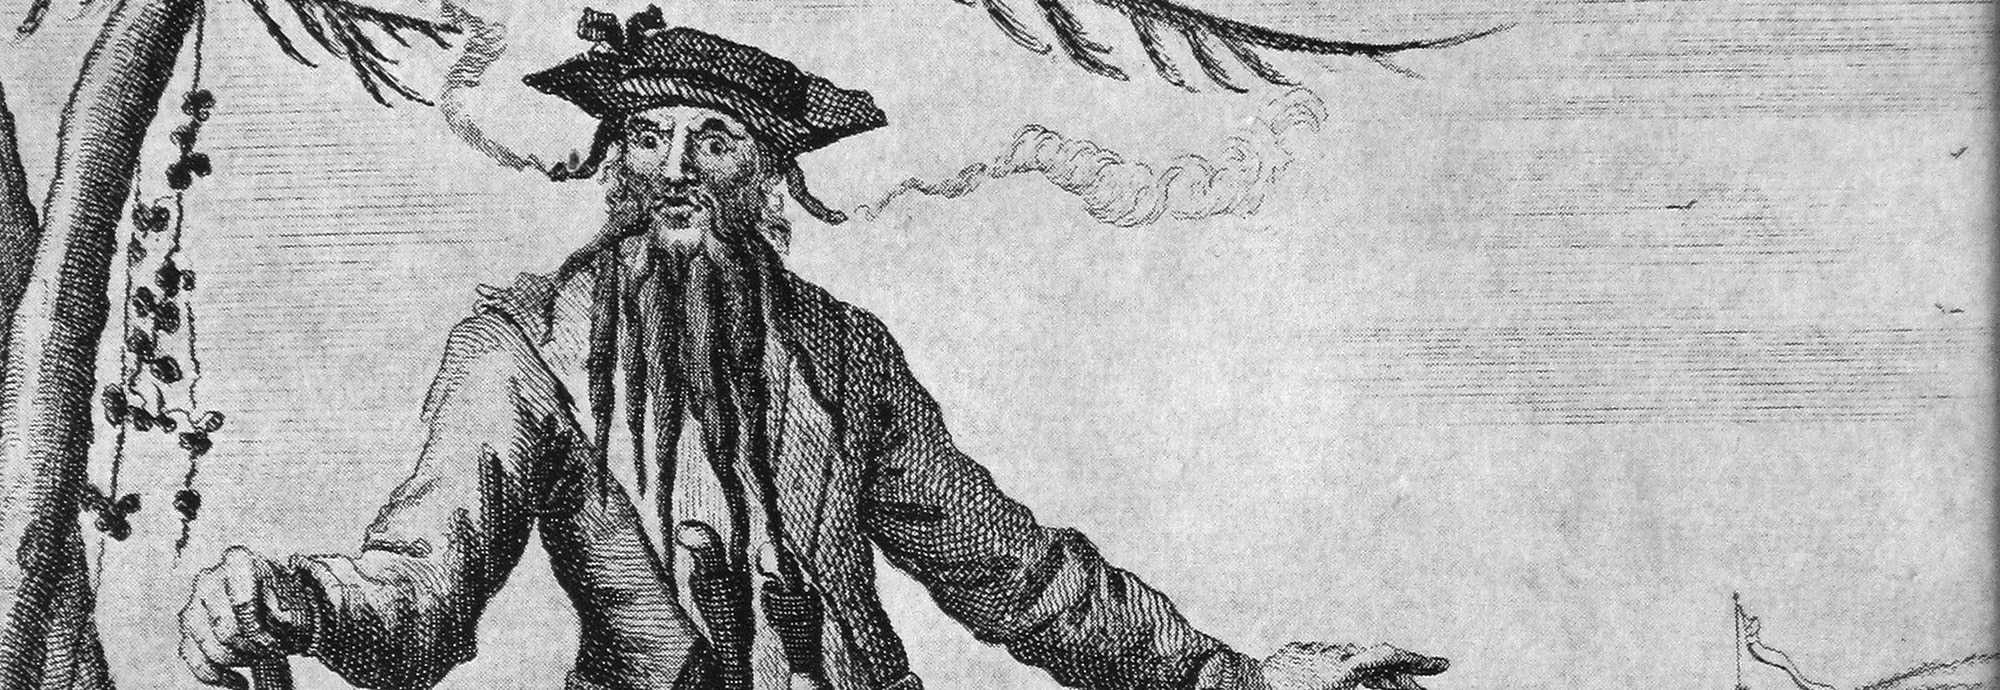 Black and white illustration of the pirate Blackbeard.